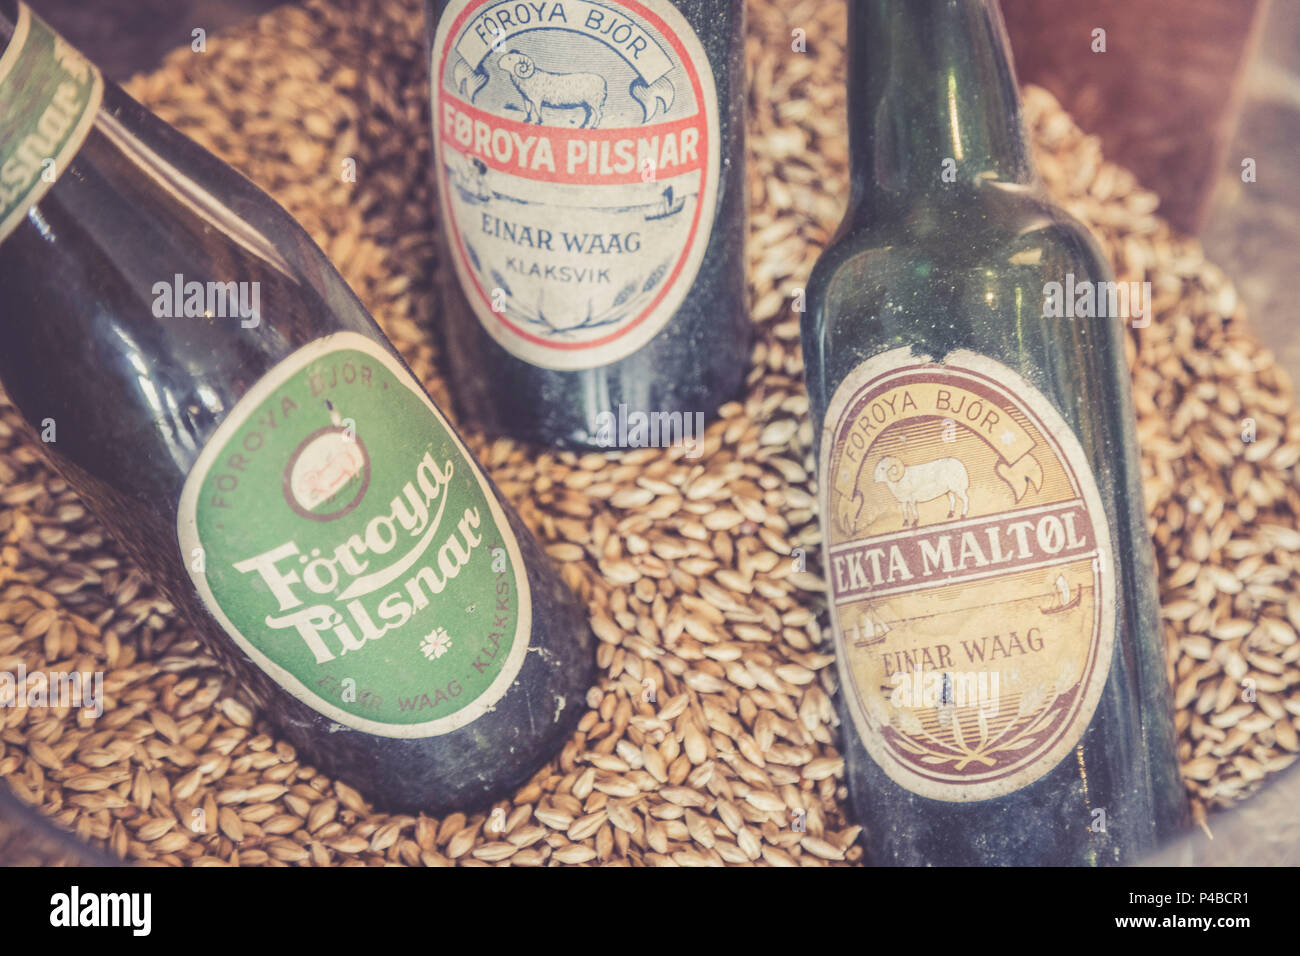 Close up of beer bottles on cereal grain background in the Foroya Bjor family brewery, Klaksvik, Bordoy Island, Faroe Islands Stock Photo